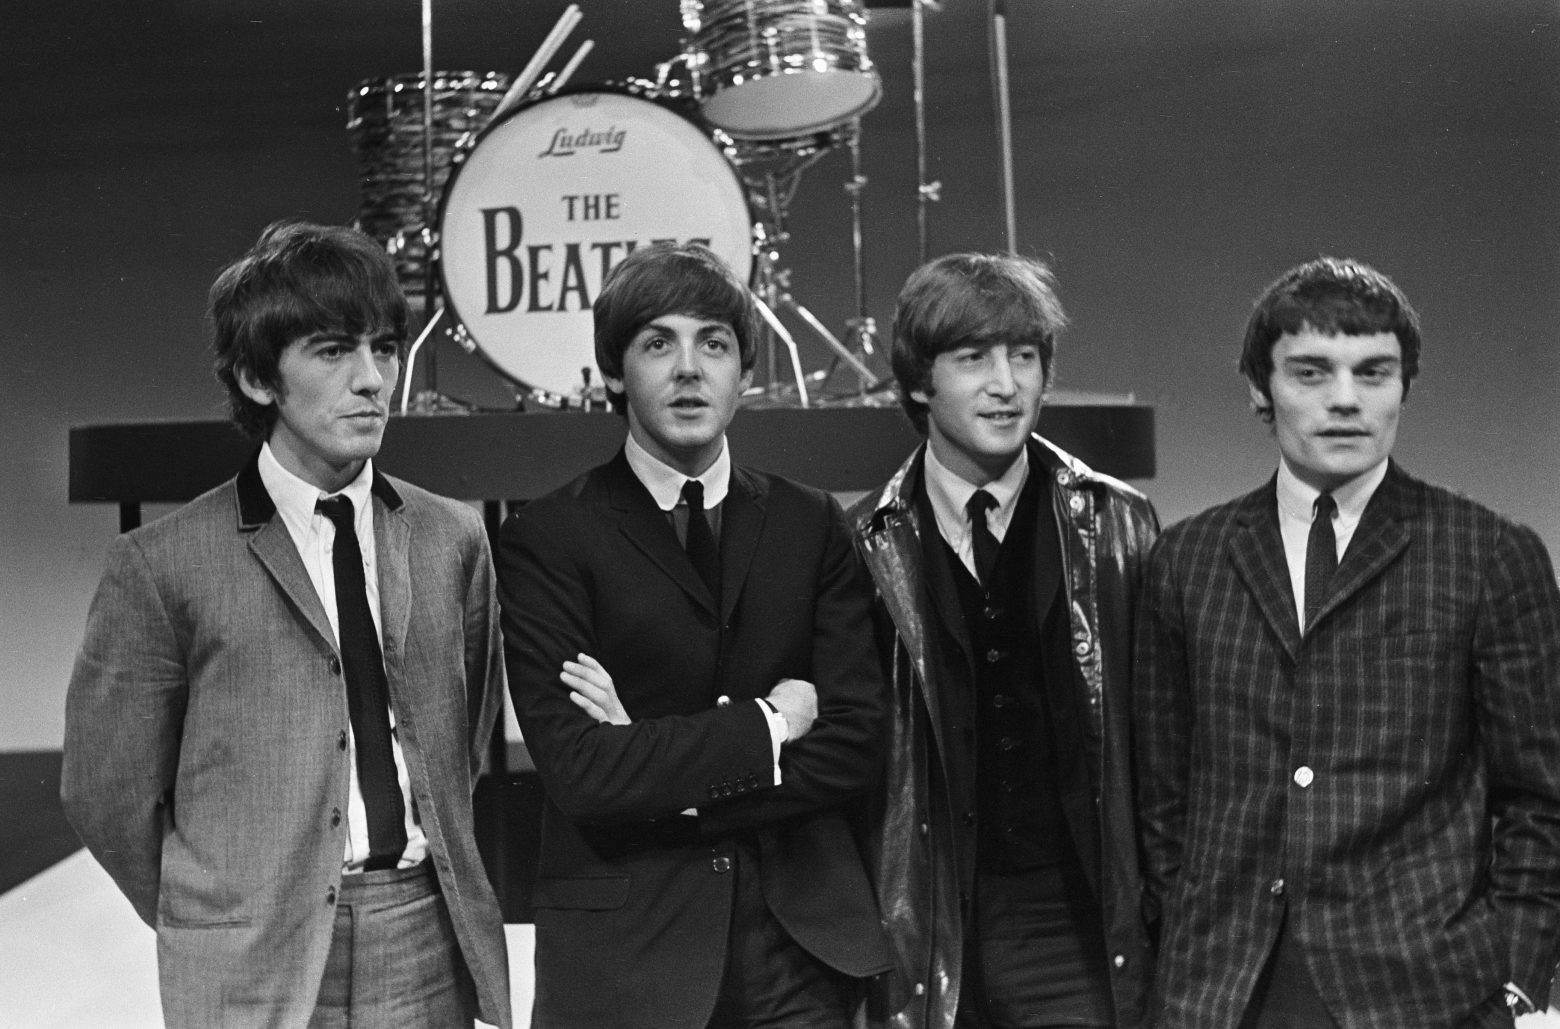 Beatles: Σε δημοπρασία η επικριτική επιστολή τριών σελίδων που είχε στείλει ο Τ.Λένον στον Π.Μακάρτνεϊ (φώτο)